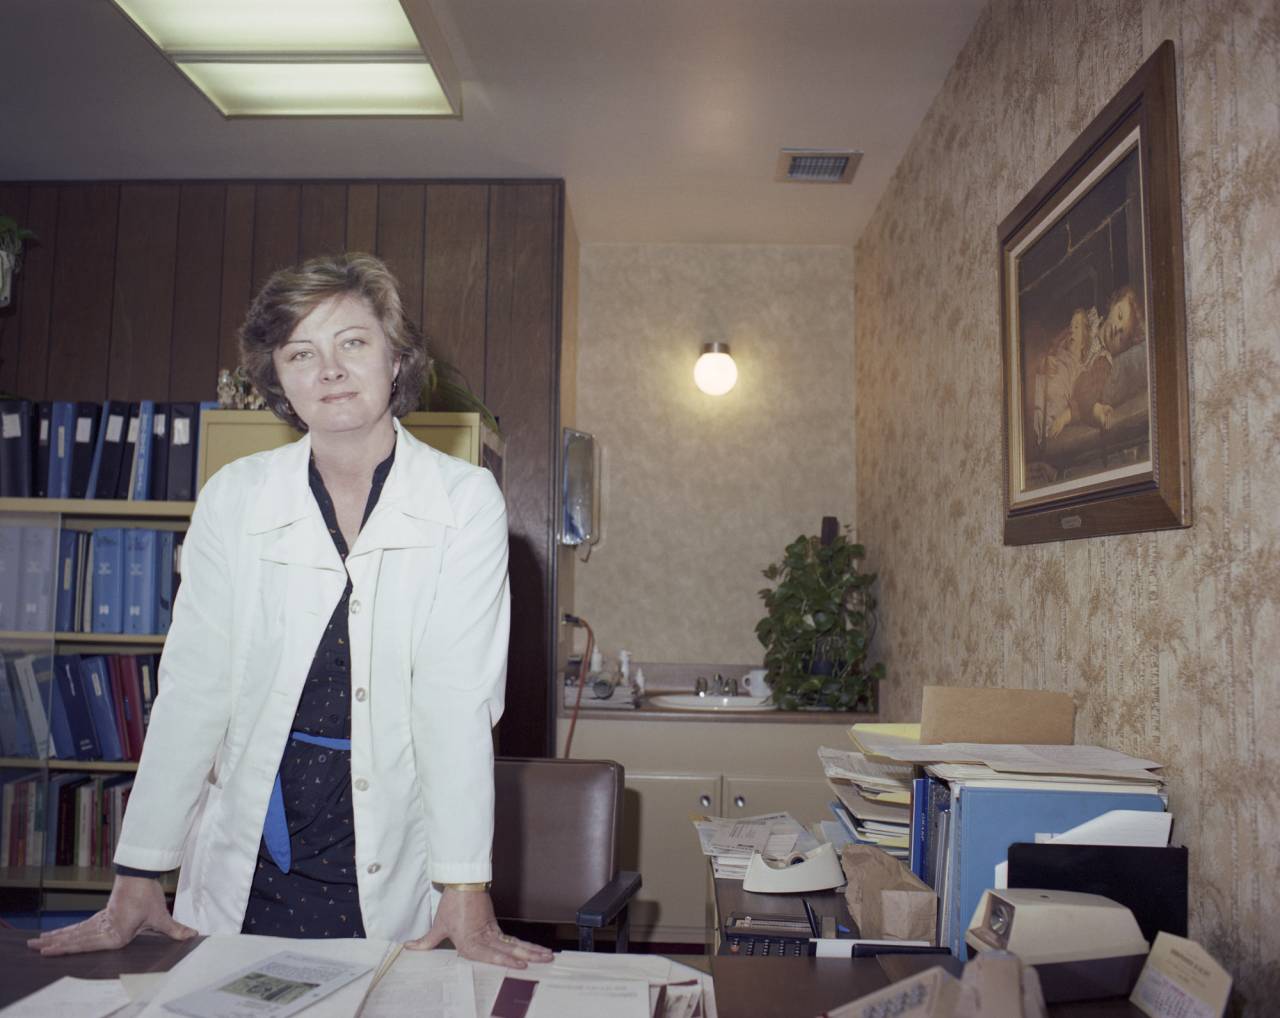 Los Angeles hospital in 1983